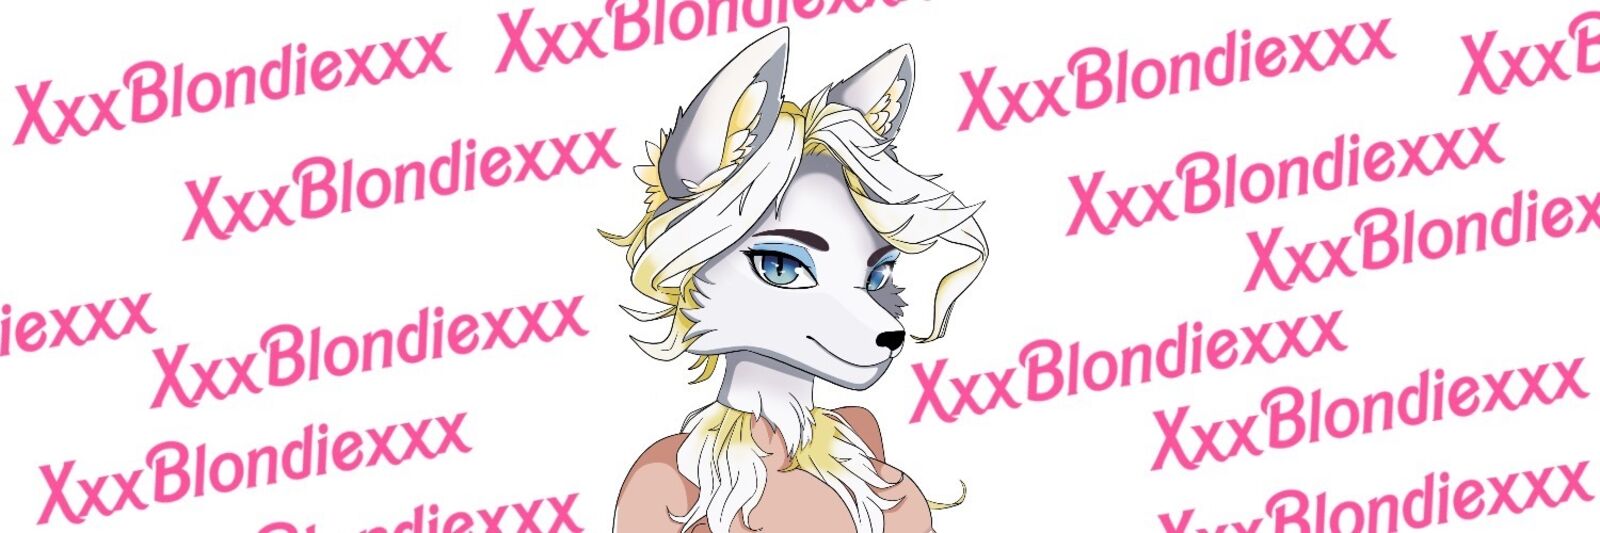 See XxxBlondiexxX profile